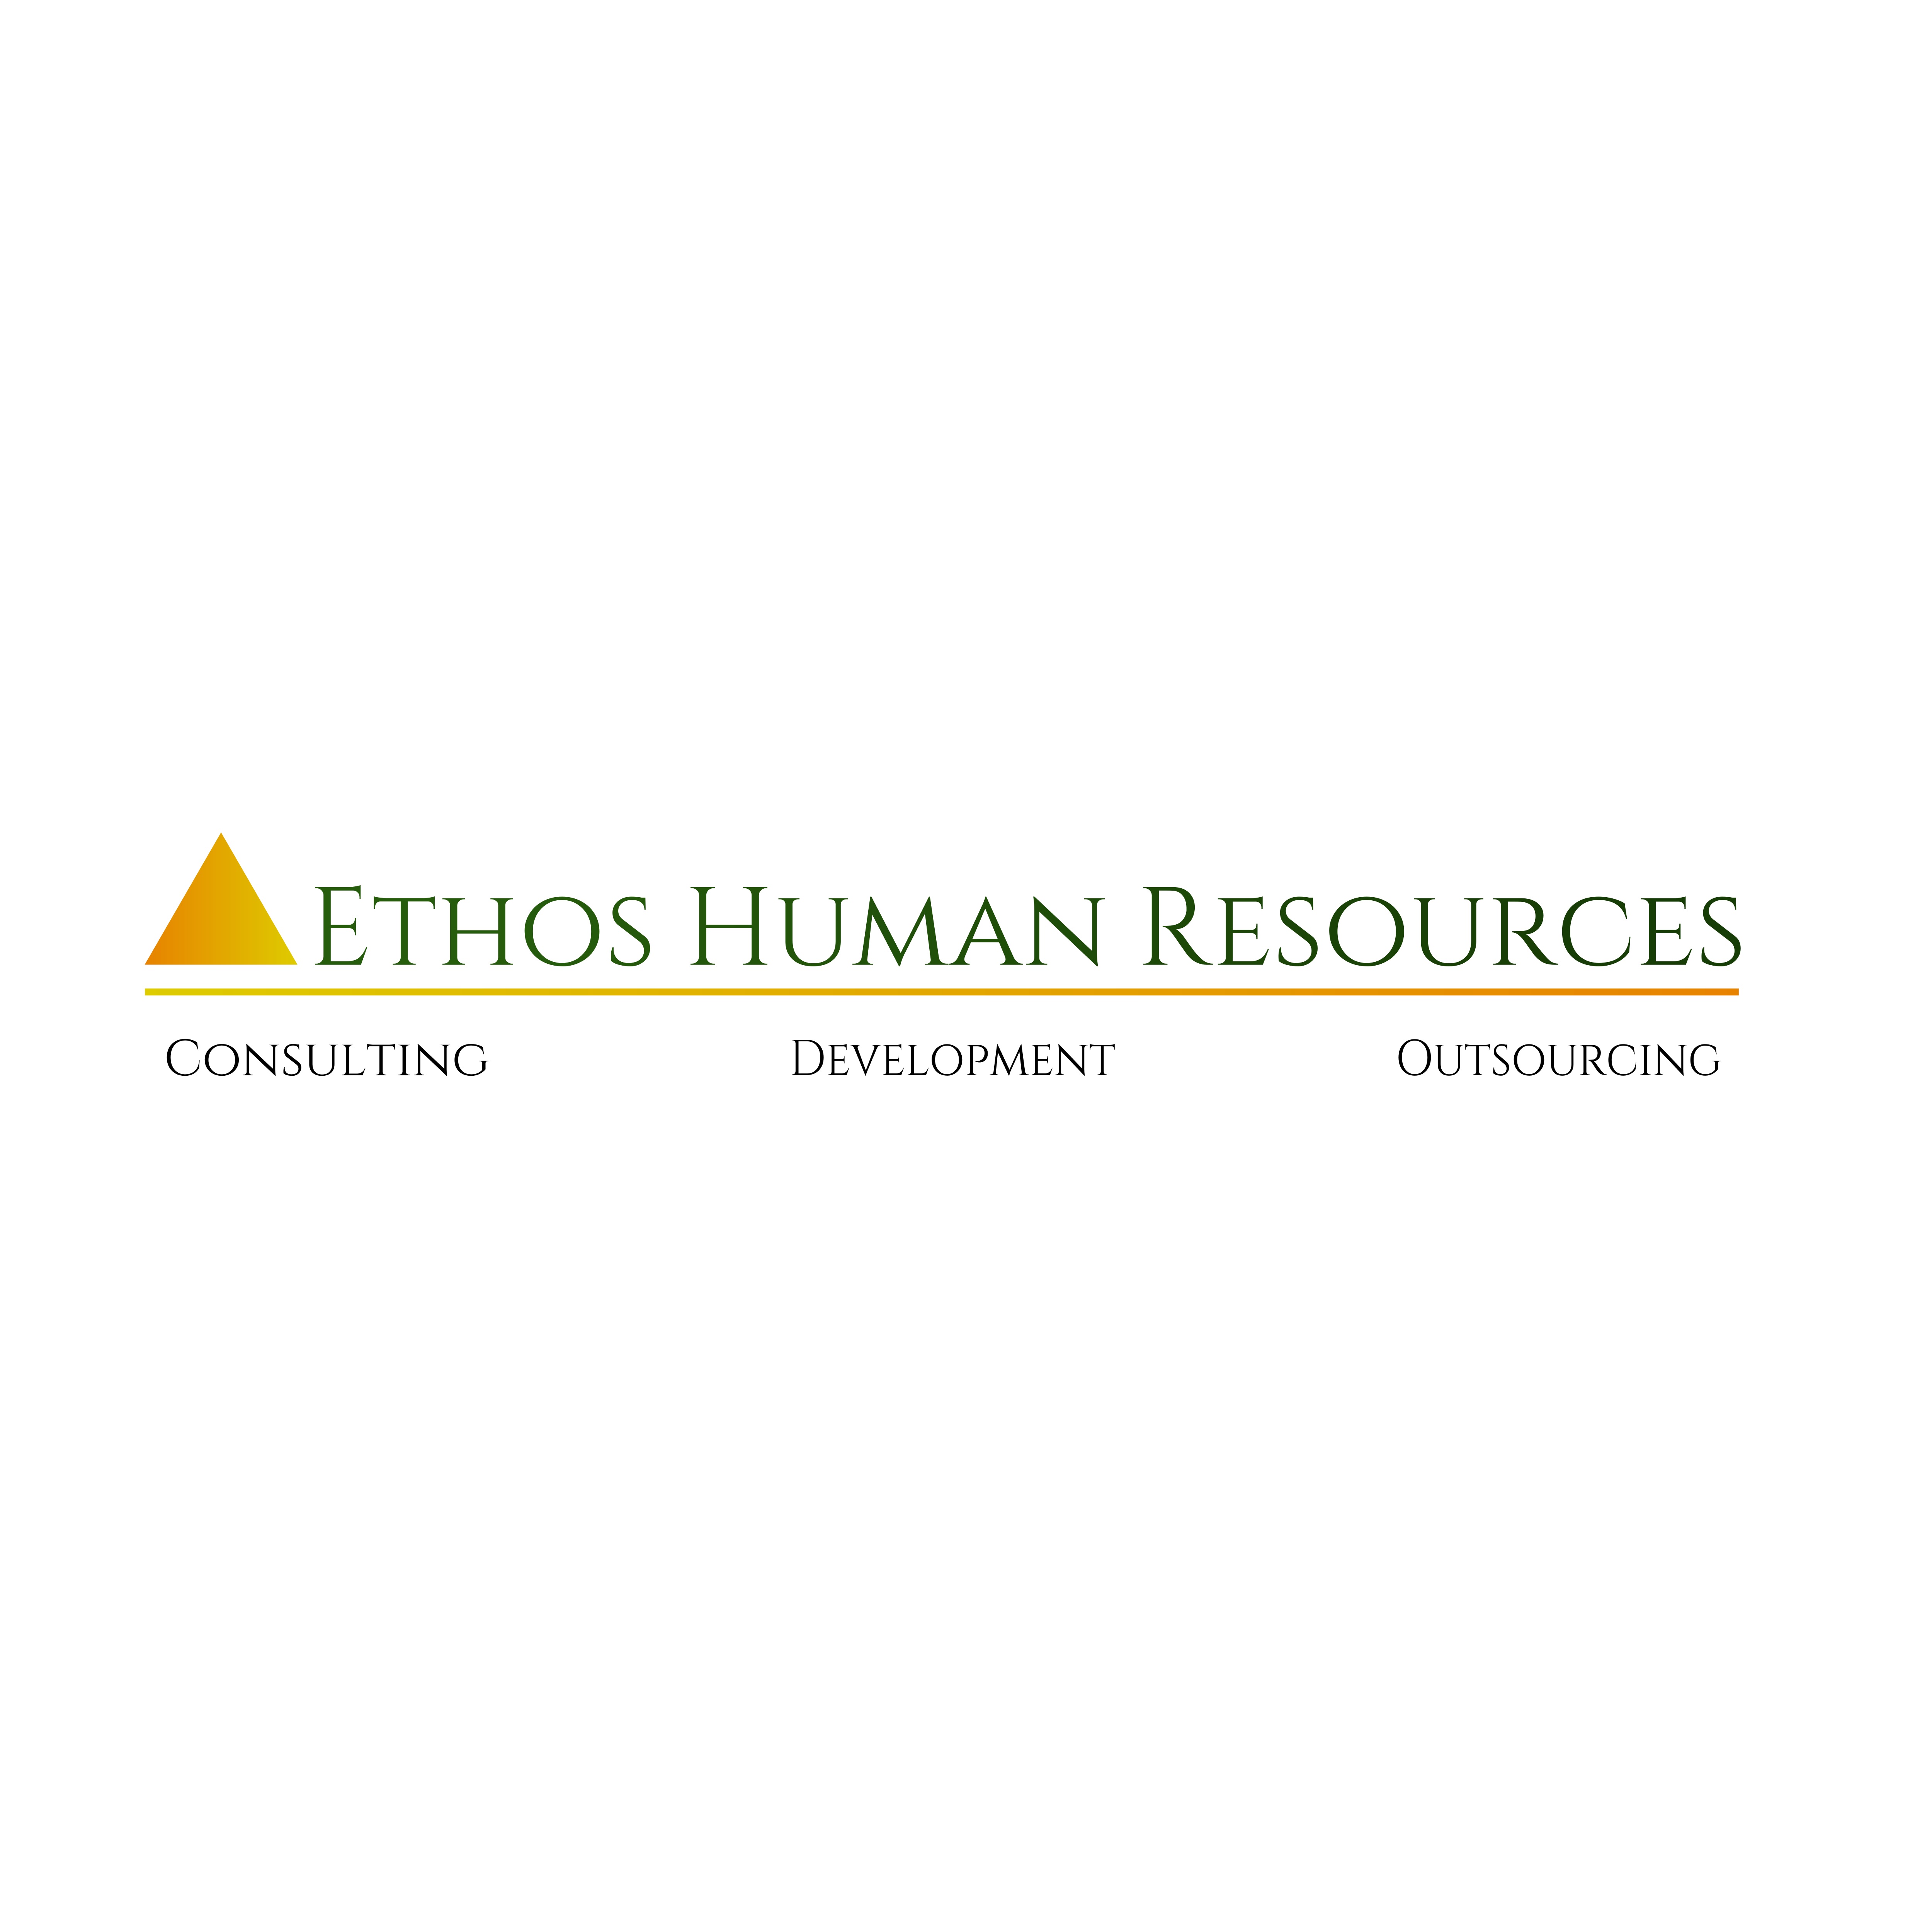 Ethos Human Resources